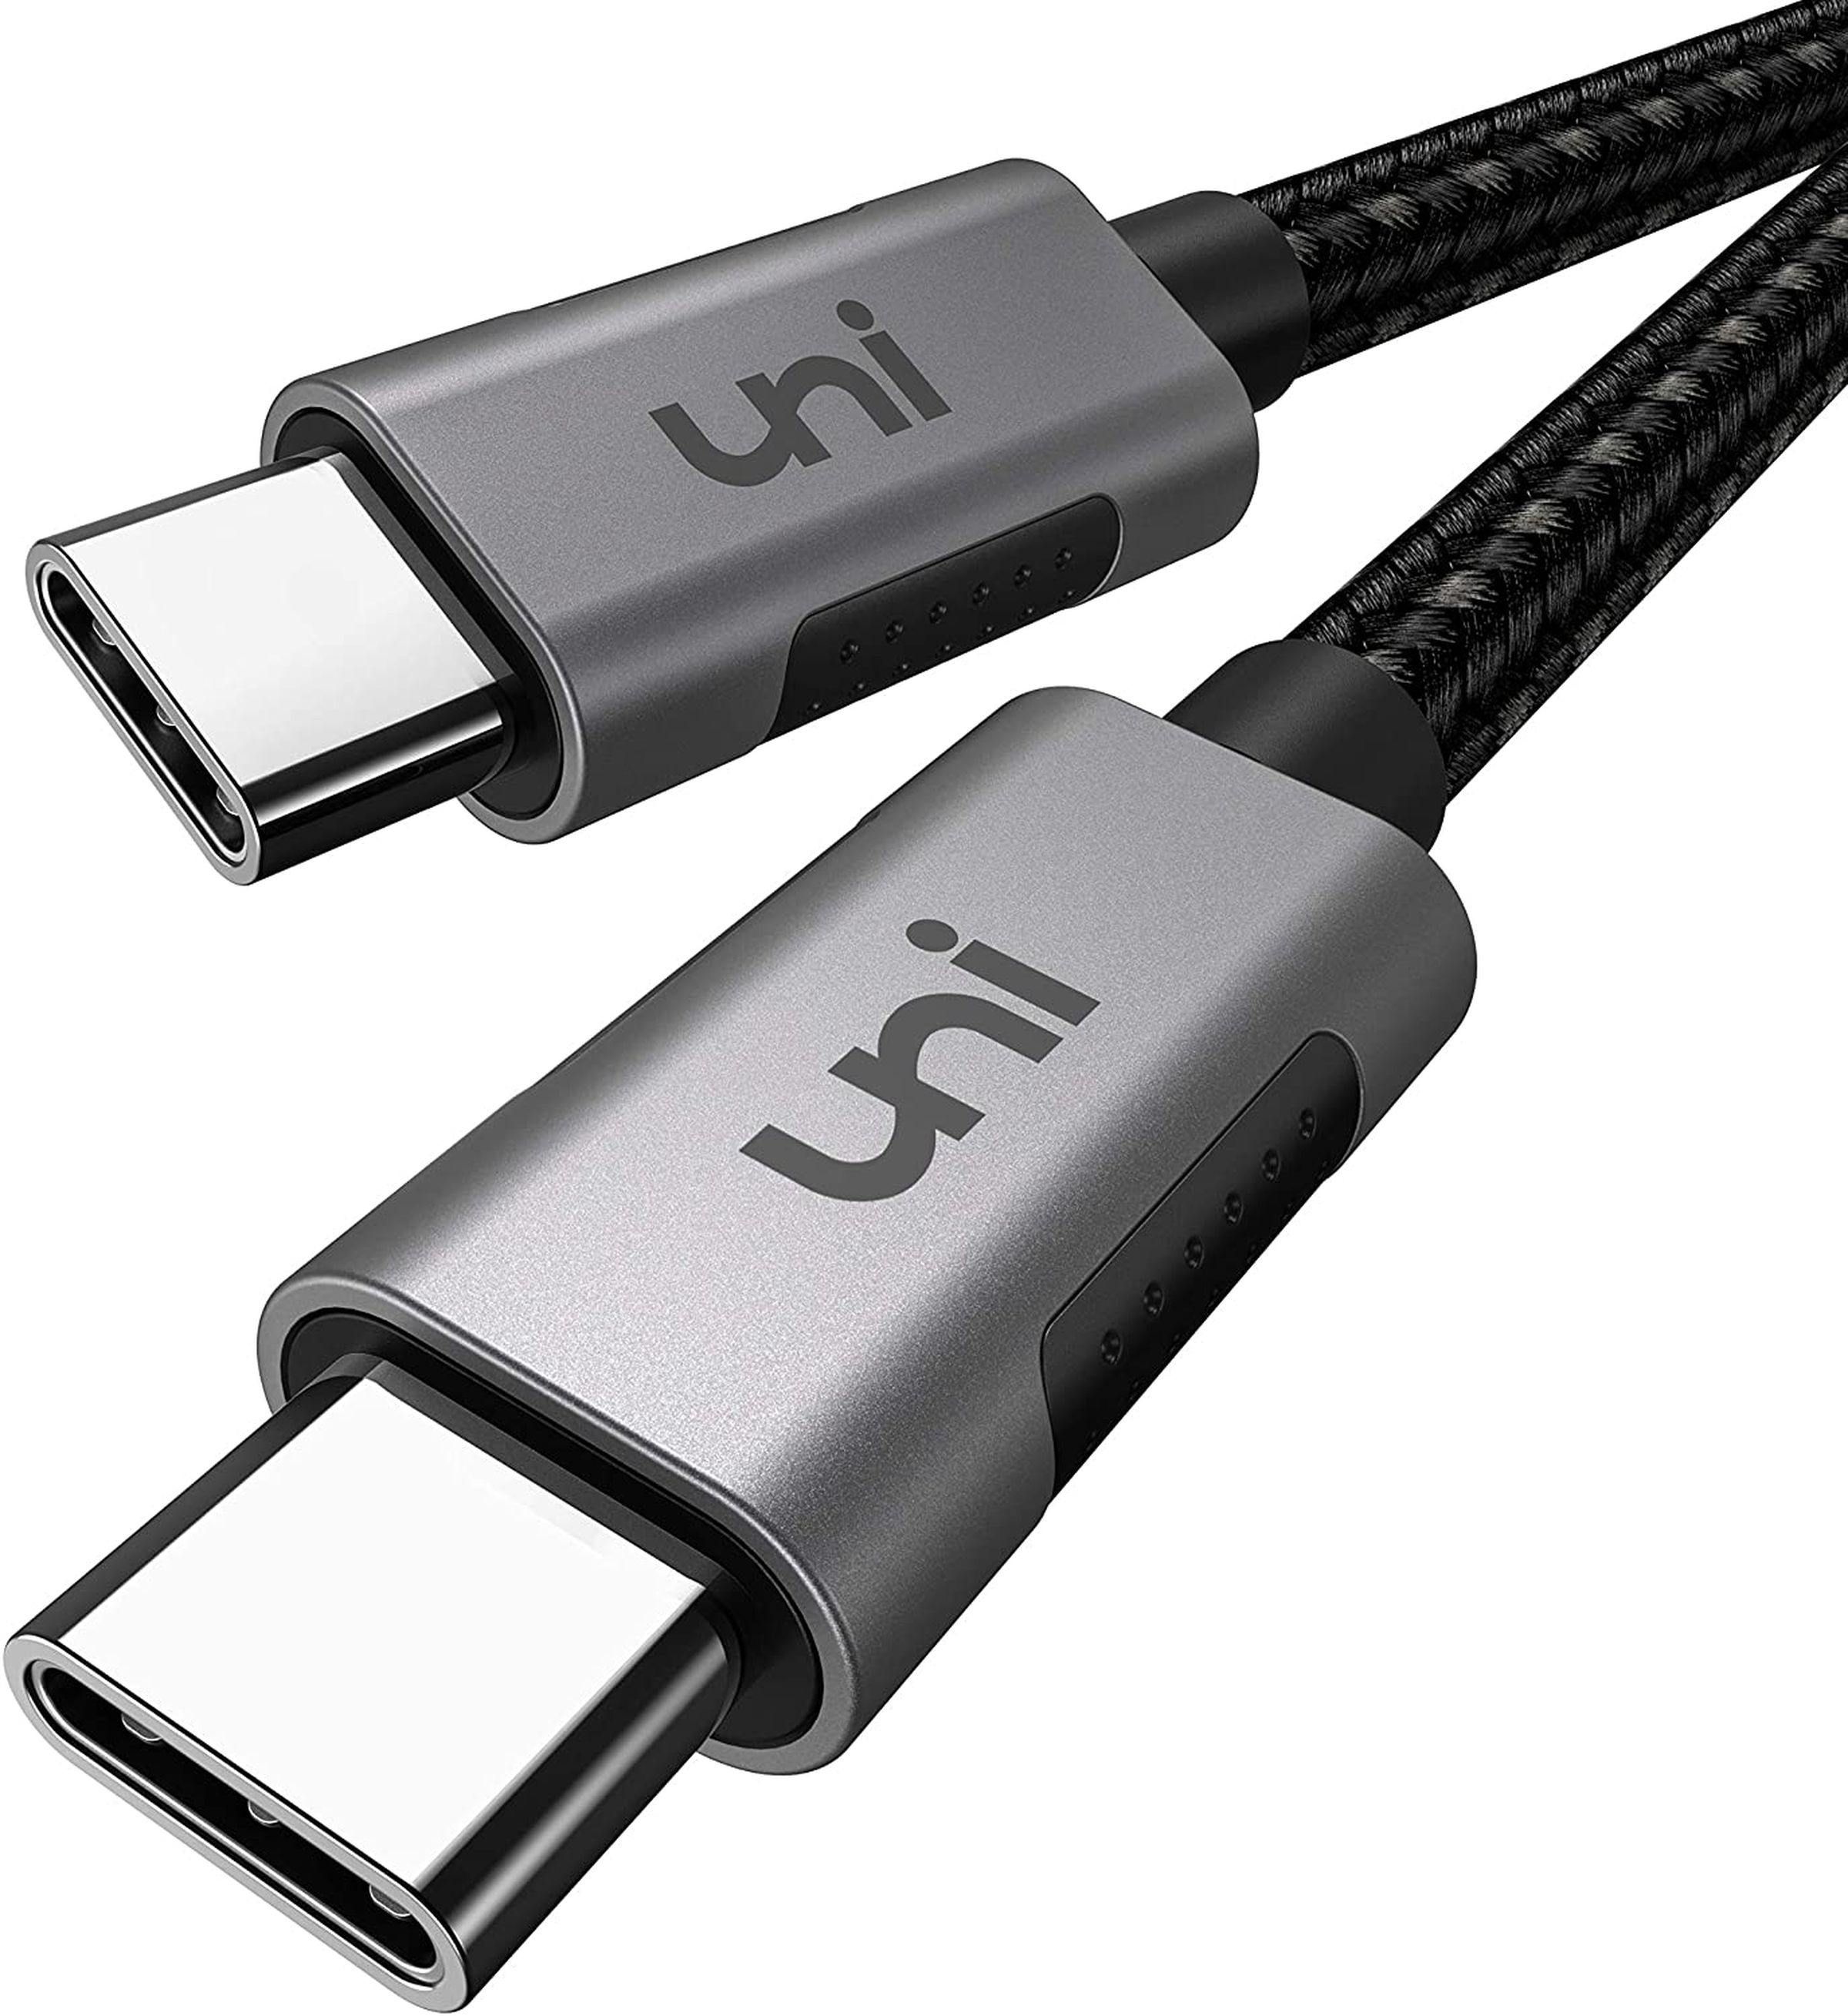 Uni 10-foot-long USB-C cable